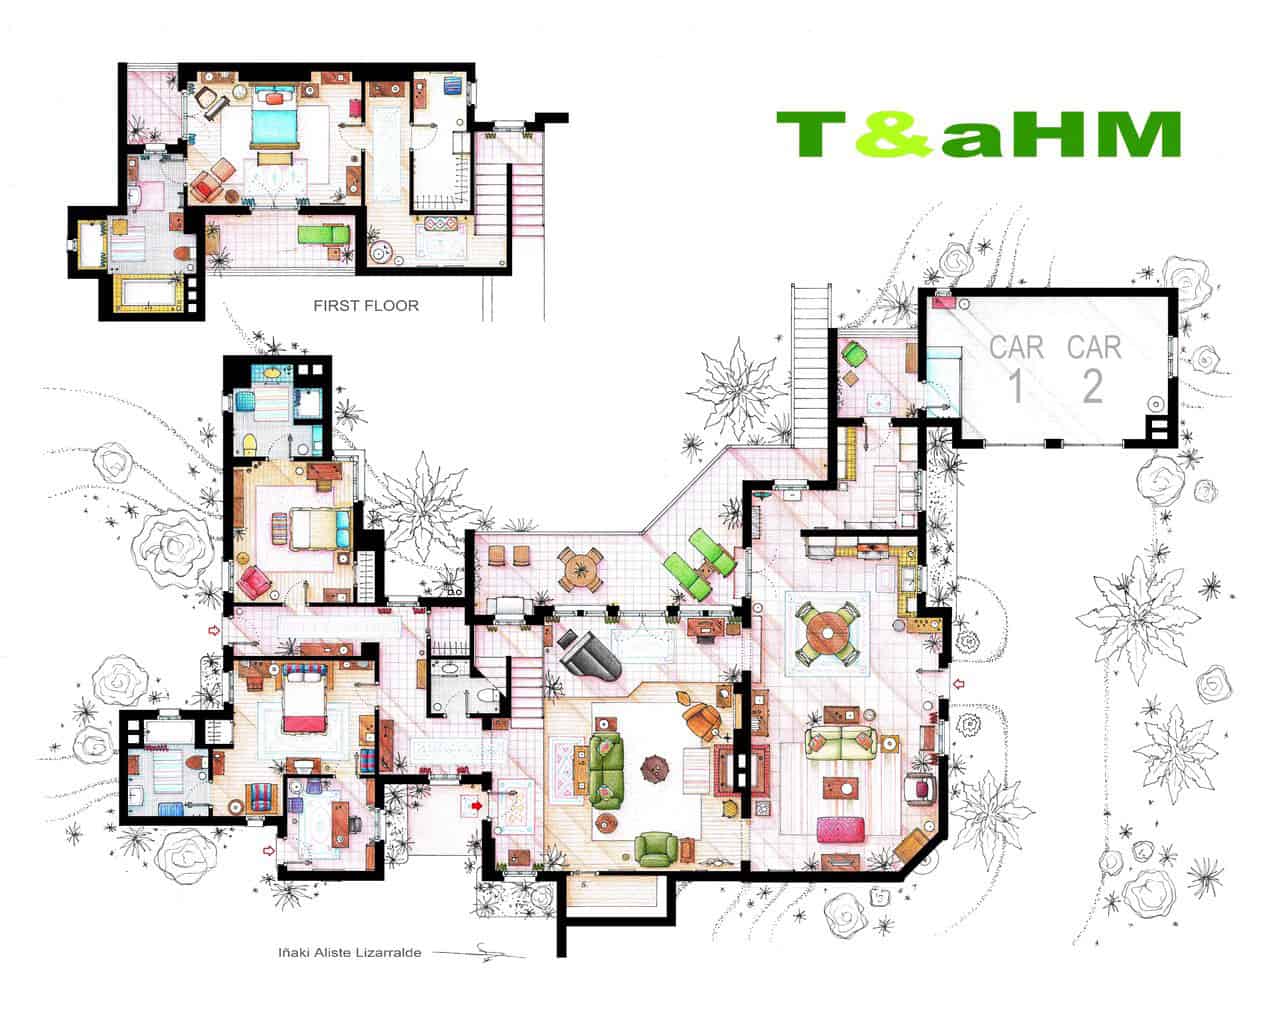 TV Home Floor Plans by Iñaki